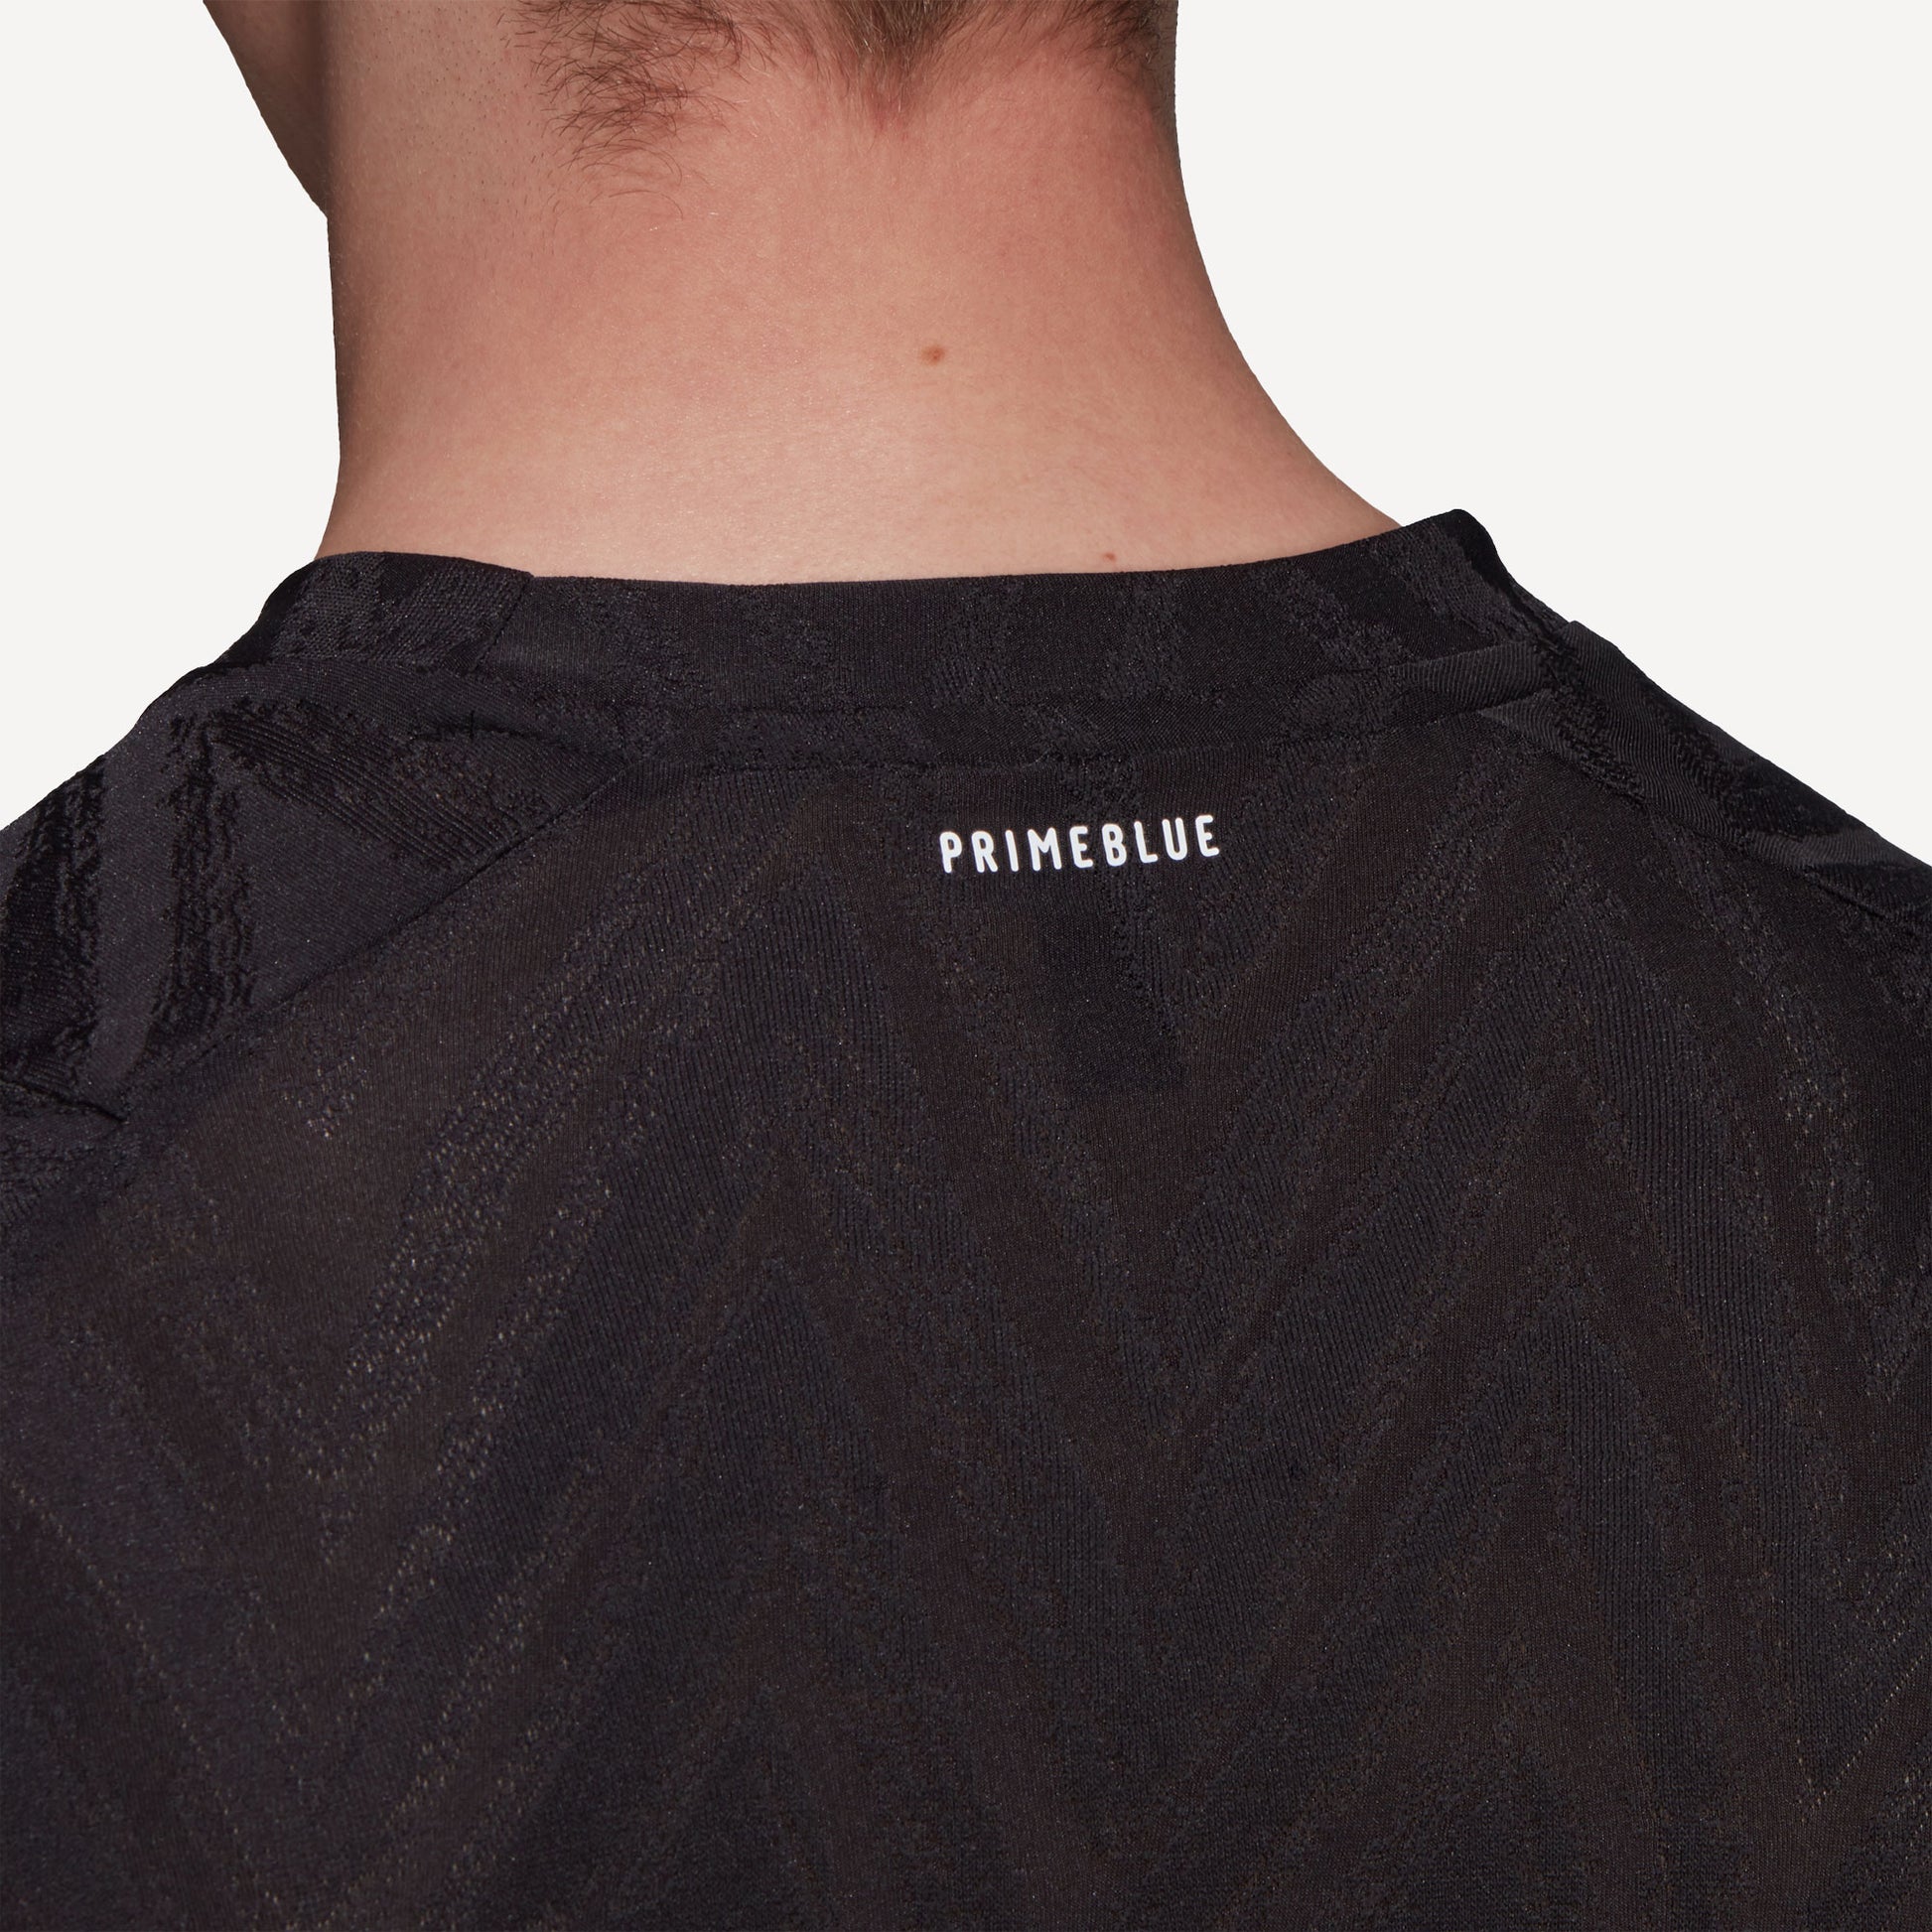 adidas Freelift Primeblue Men's Tennis Shirt Black (5)